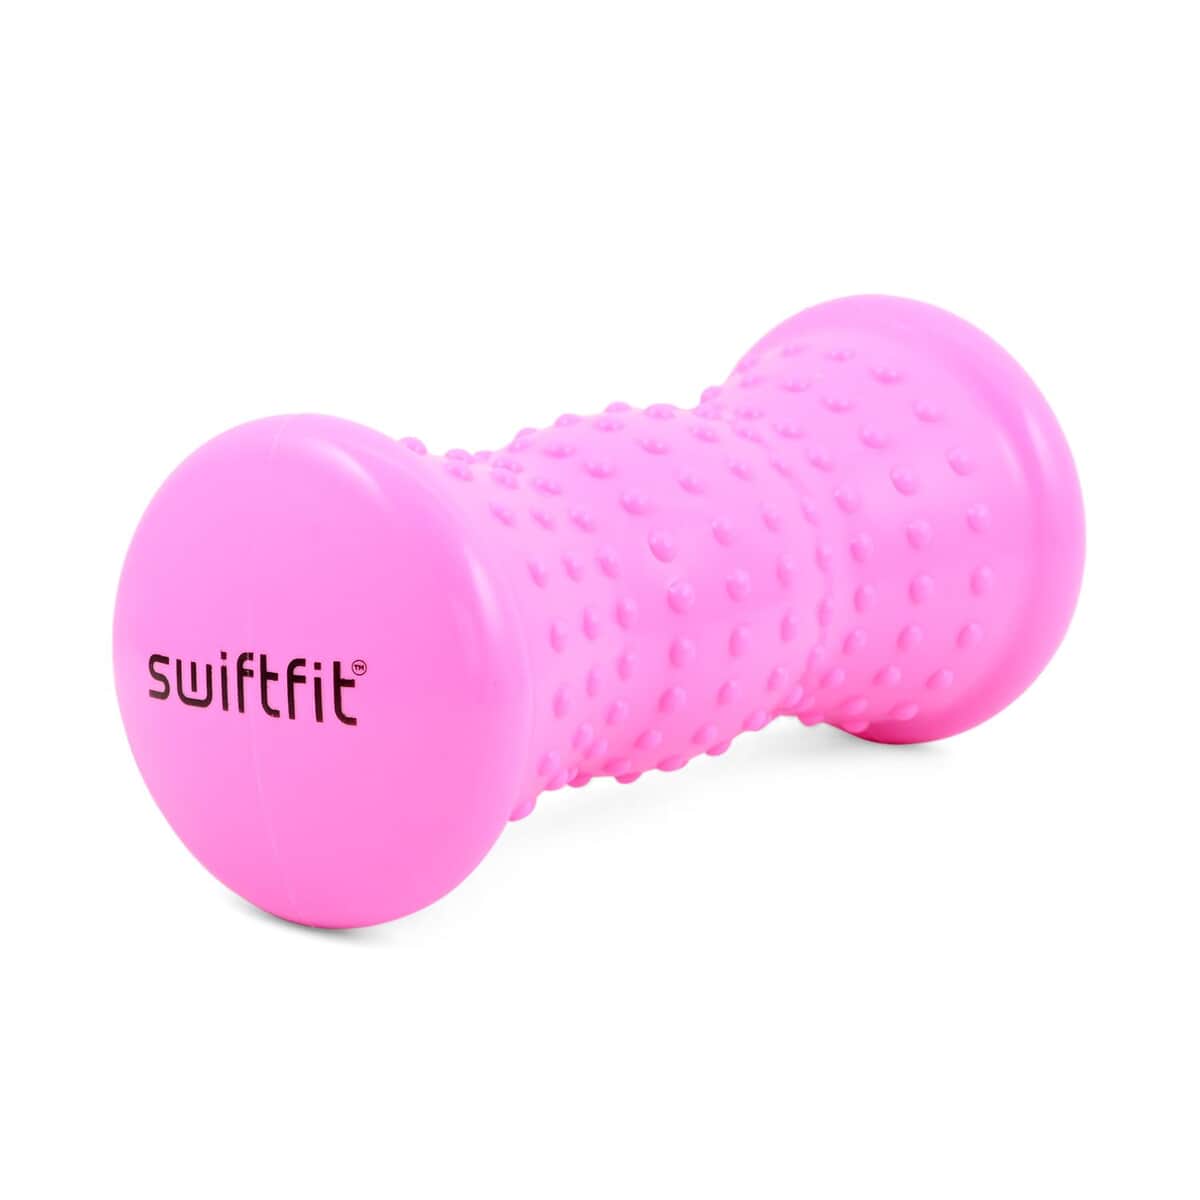 Swift Fit Hot & Cold Foot Massage Roller - Pink image number 1